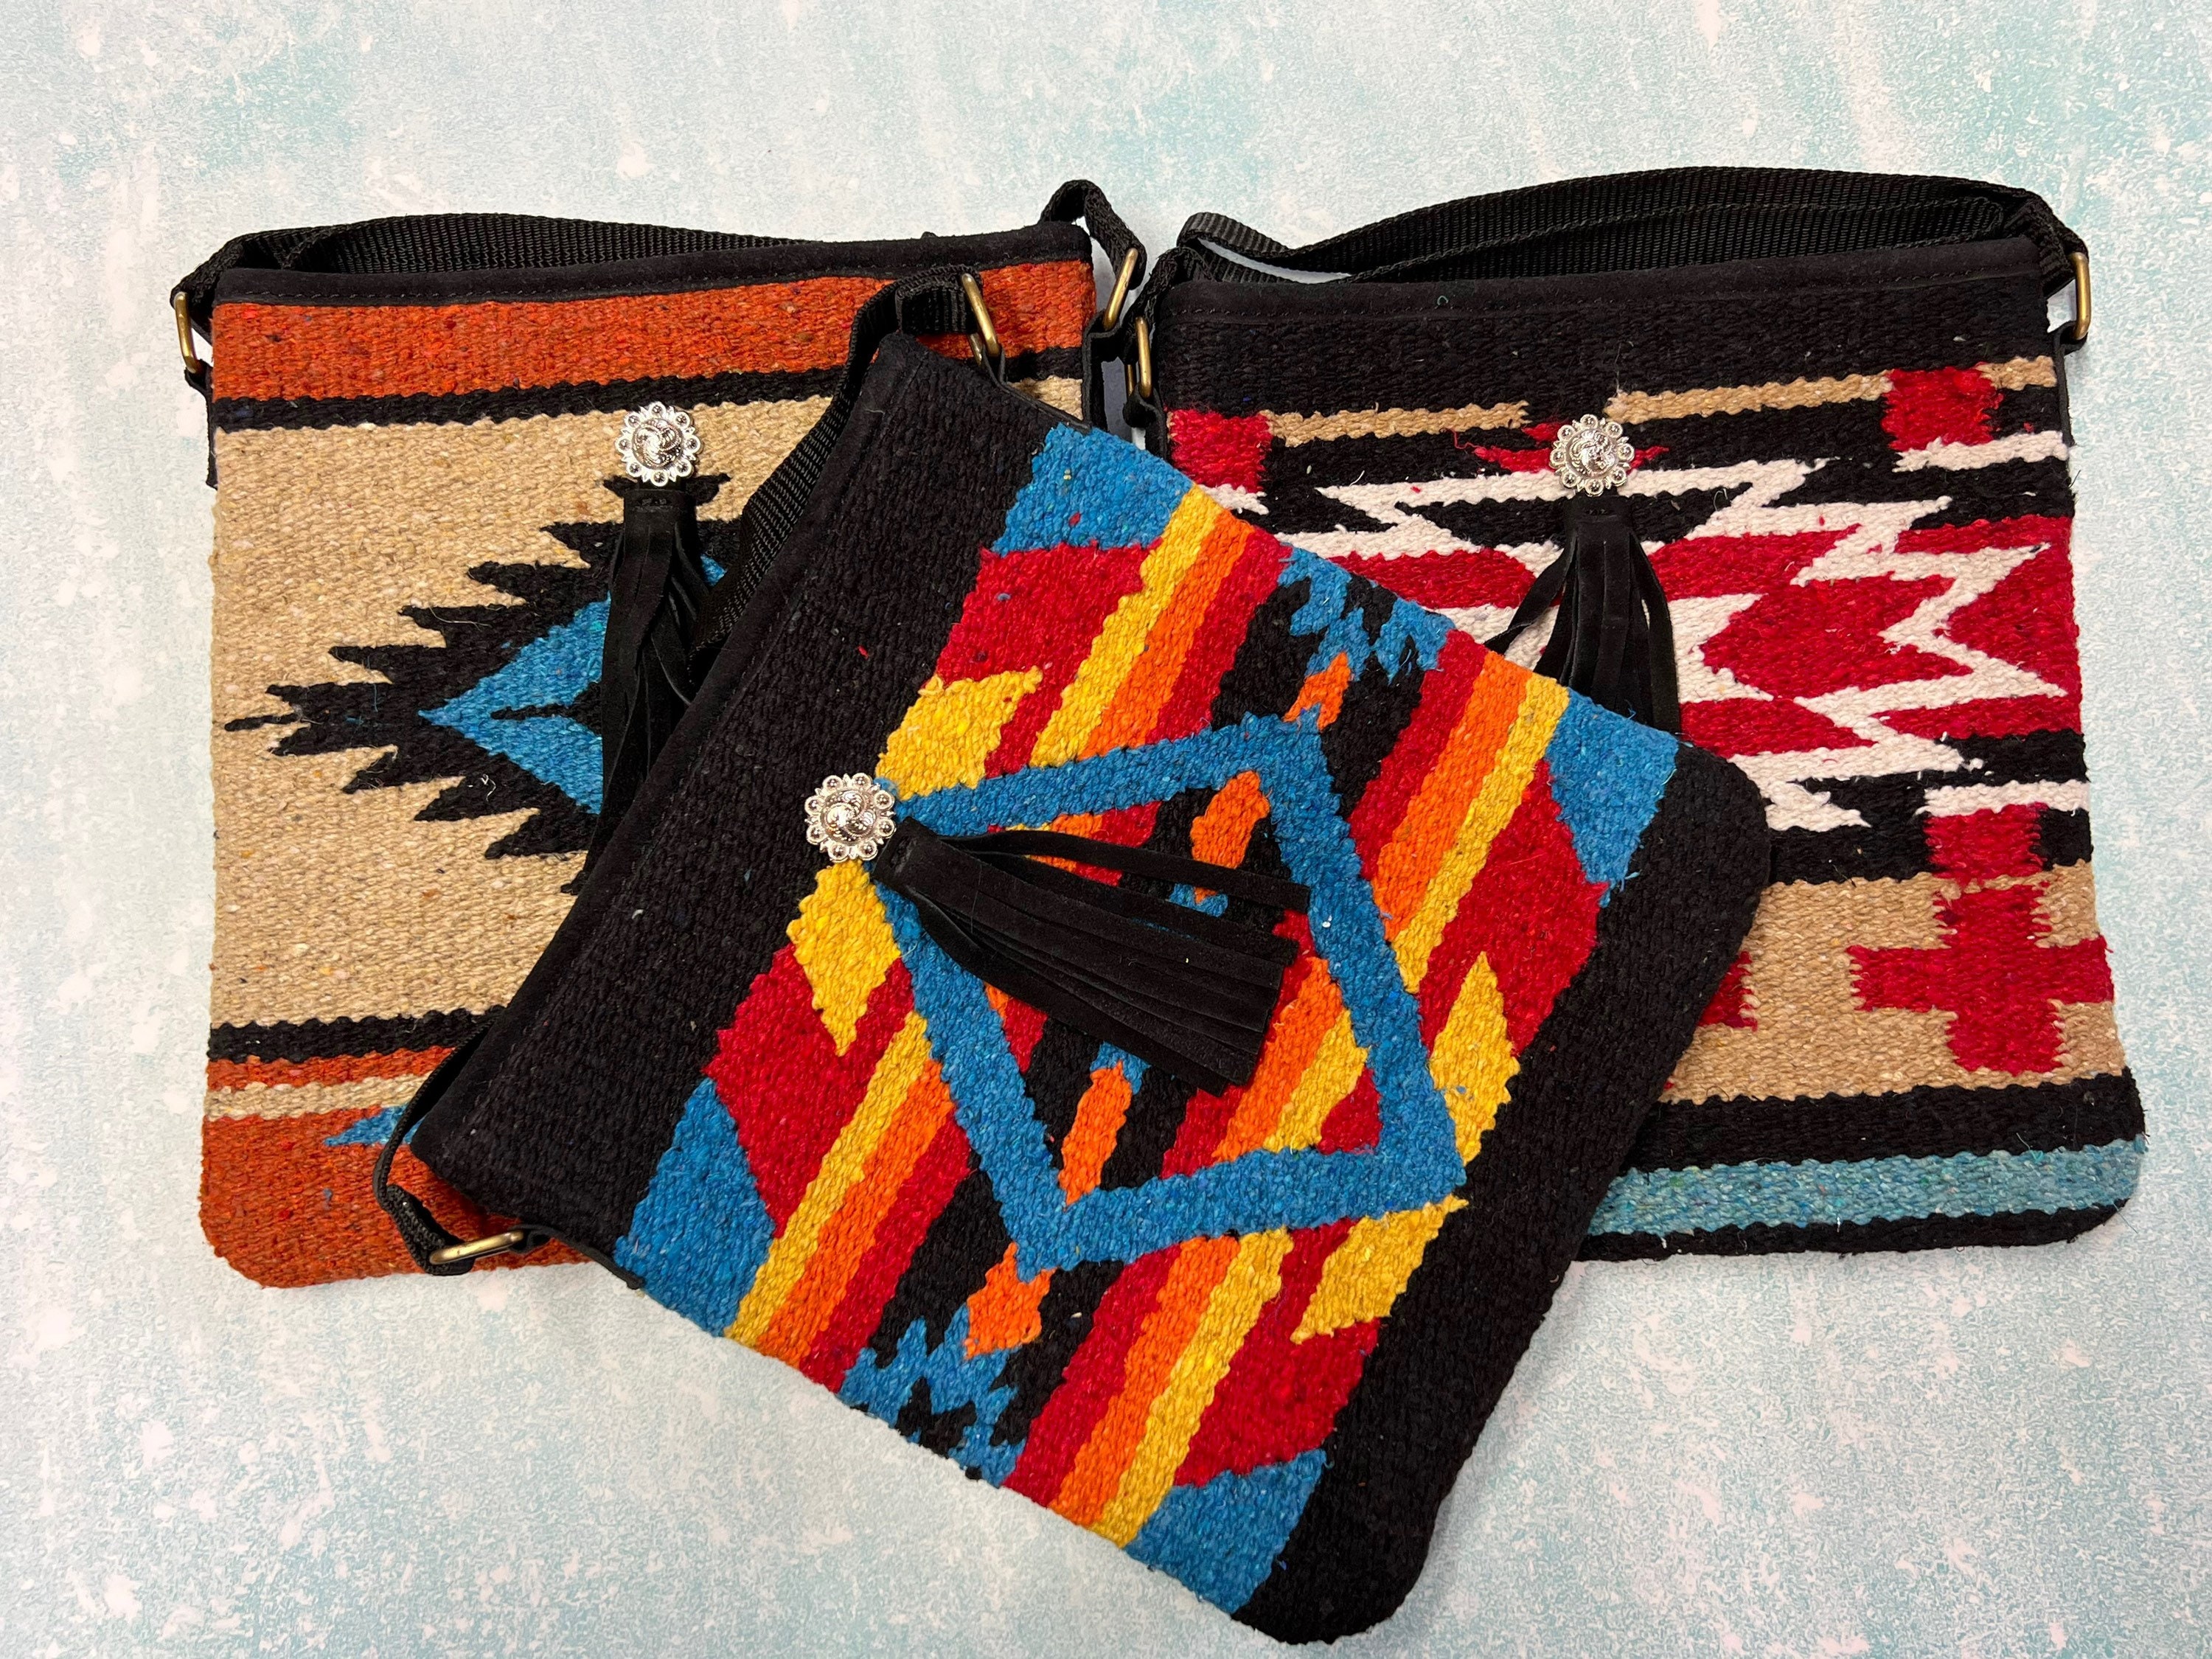 Aztec Saddle Blanket Fringe Purse – Home Folk